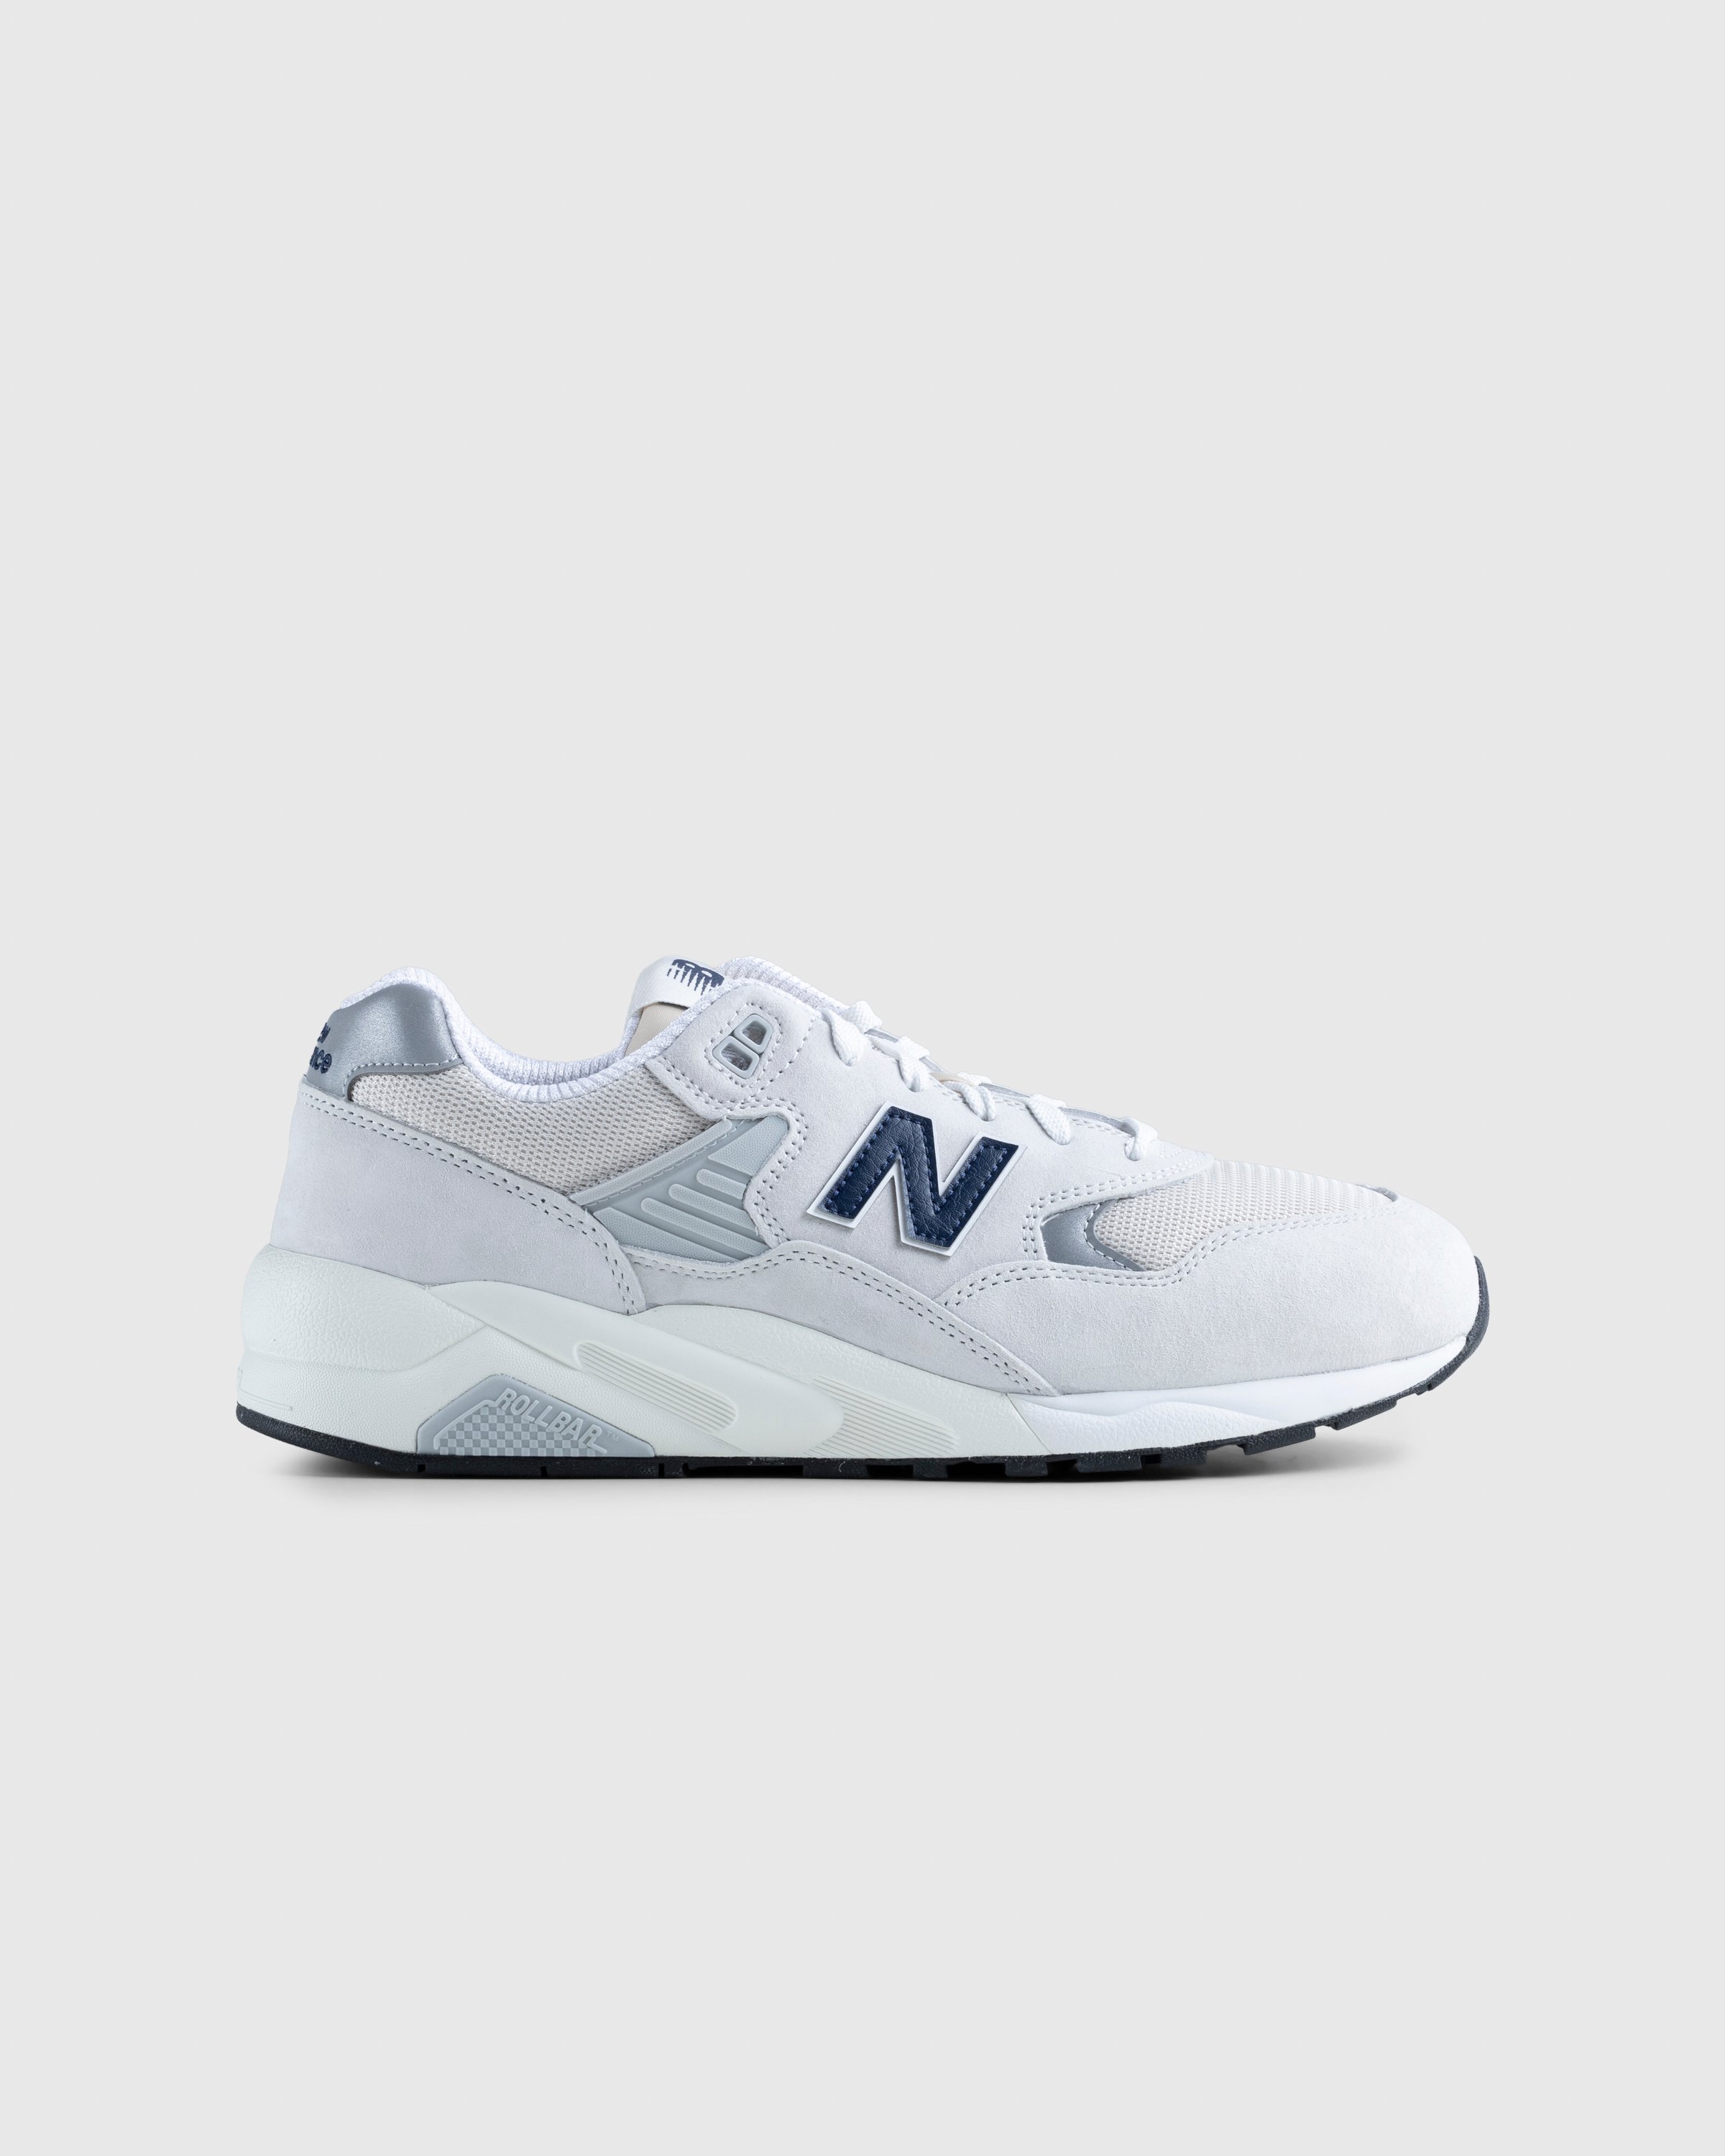 New Balance - MT580GNV Nimbus Cloud - Footwear - Grey - Image 1